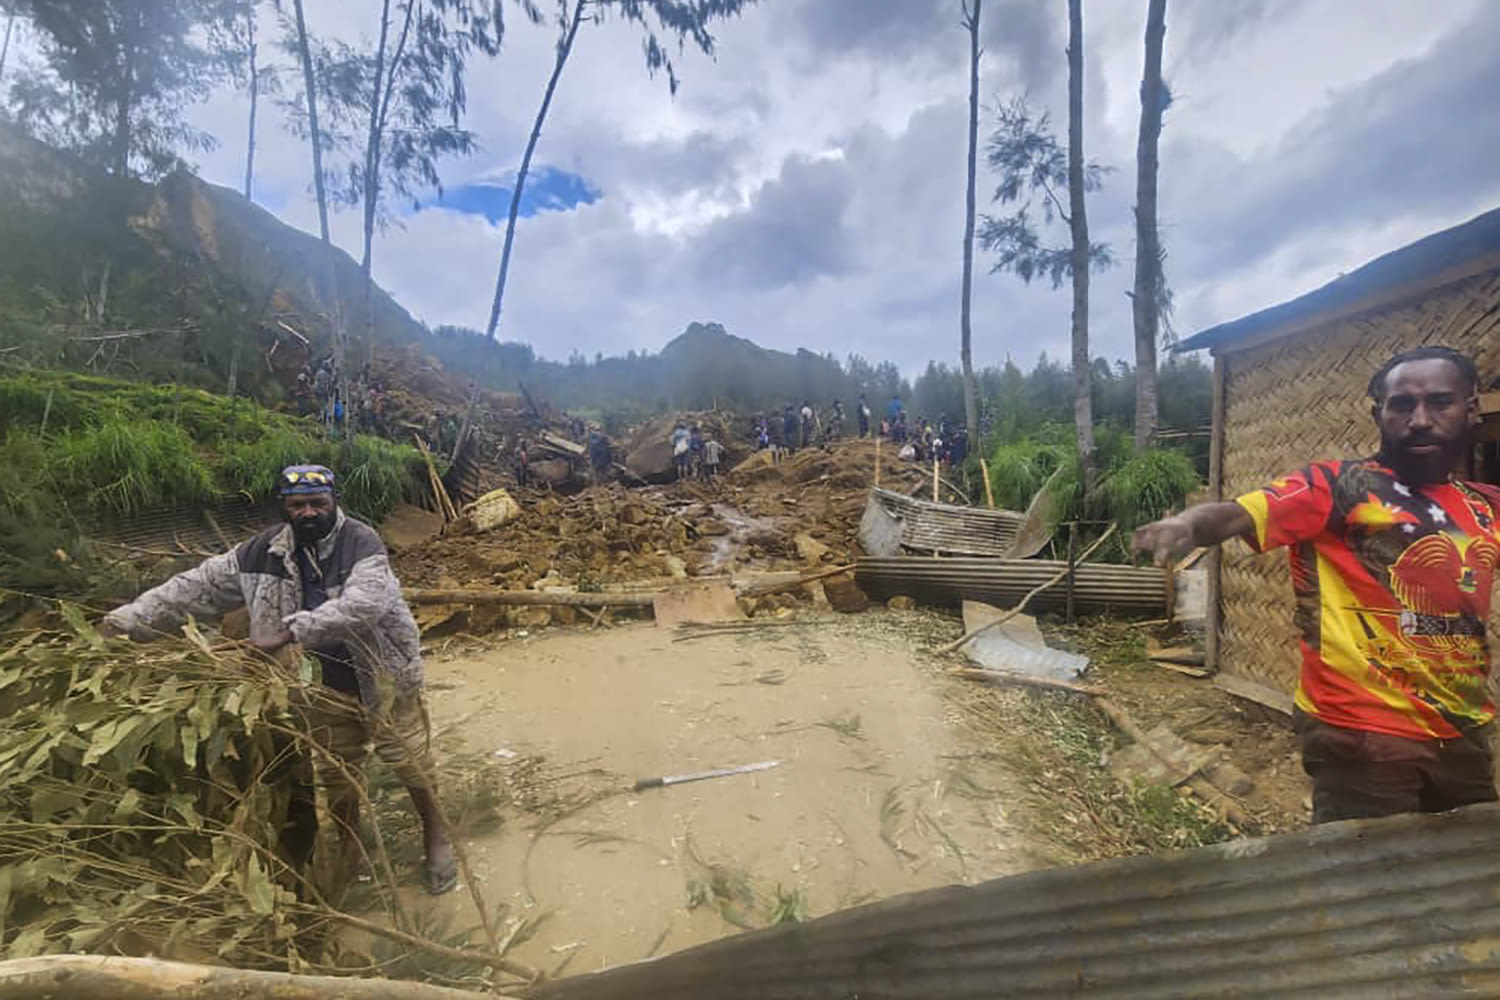 Over 670 people died in a massive Papua New Guinea landslide, UN estimates, as survivors seek safety